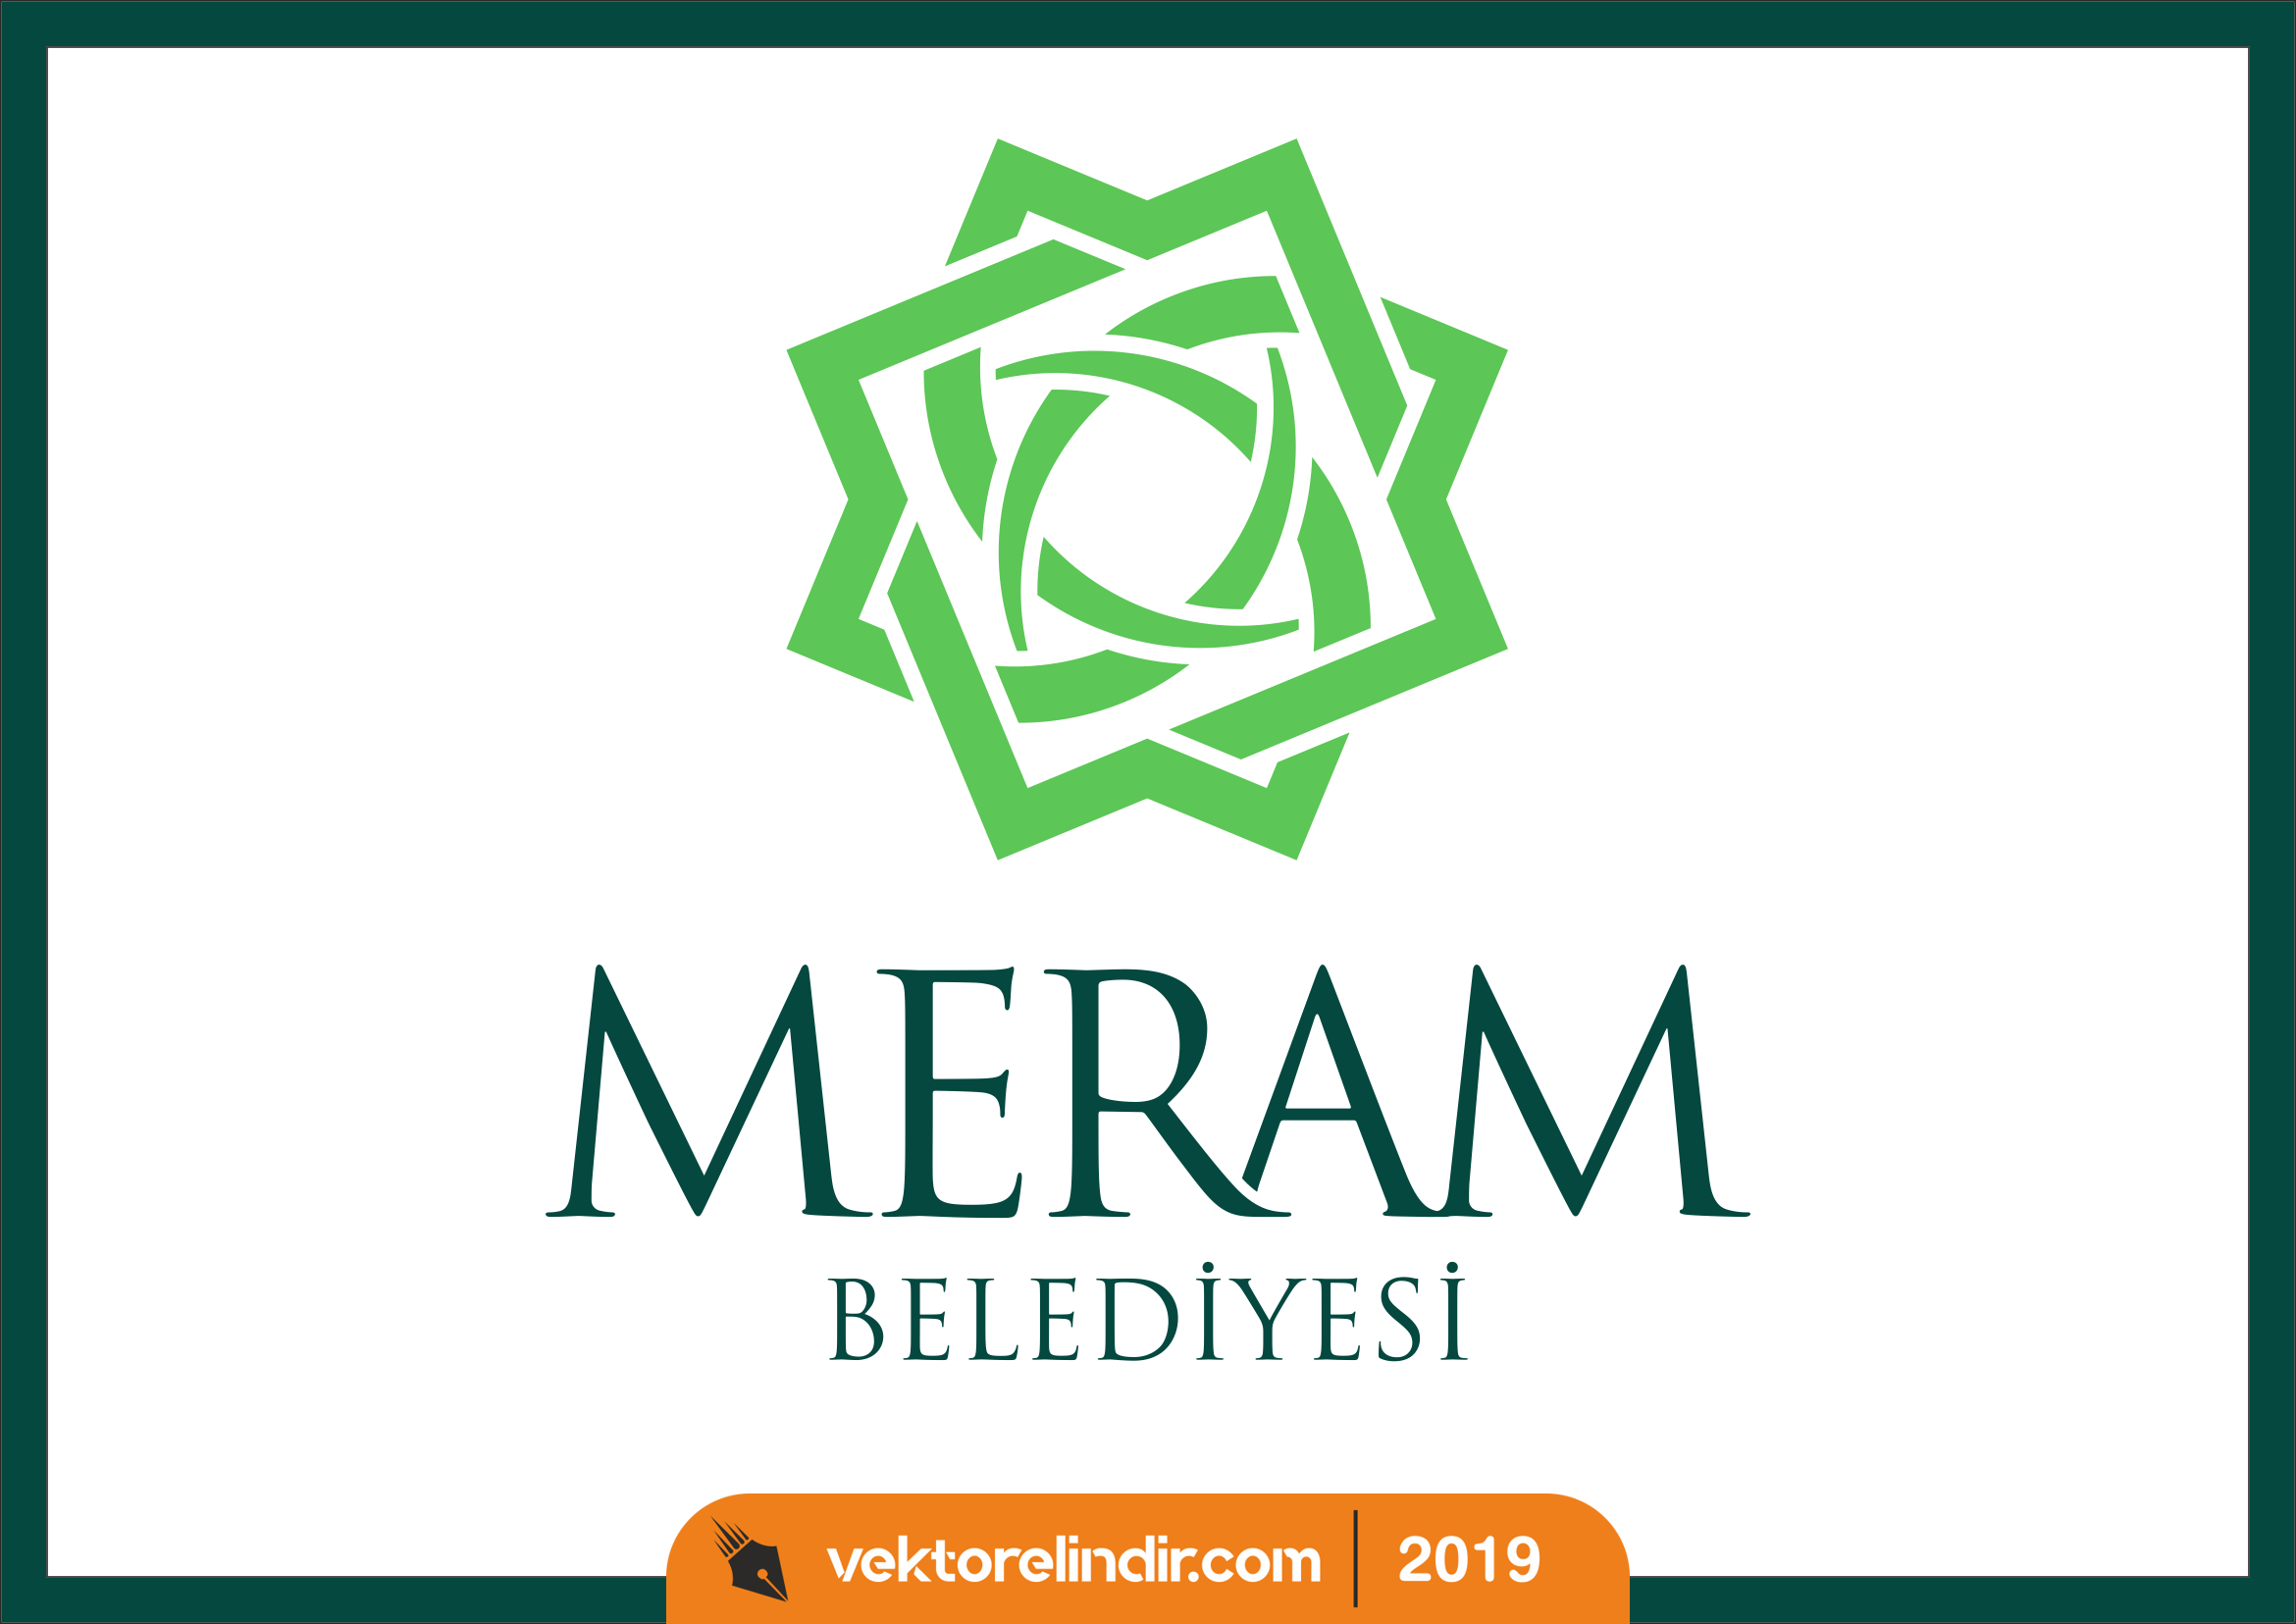 Meram Belediyesi Logo, Amblem